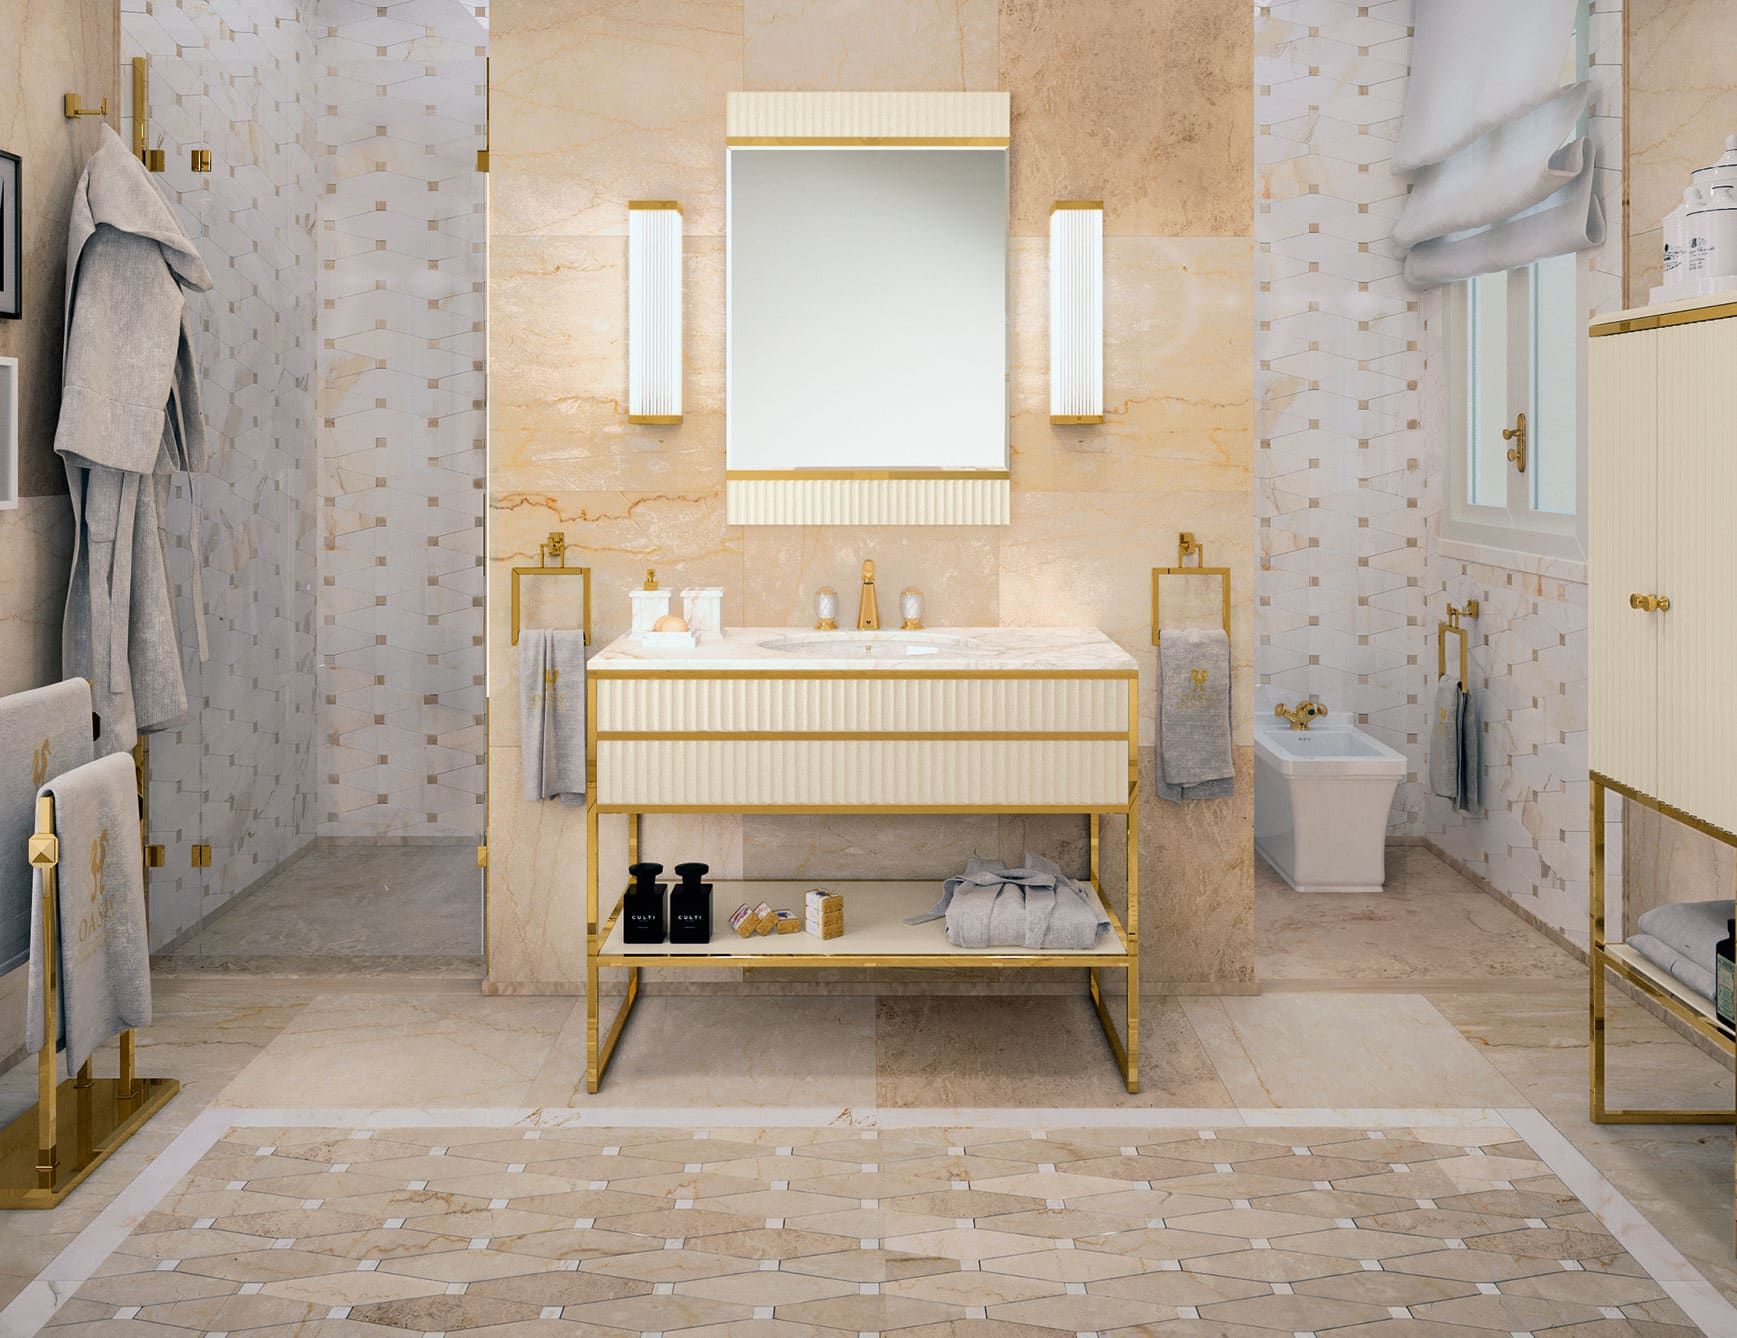 Accademia classic luxury bathroom vanity with ivory glass